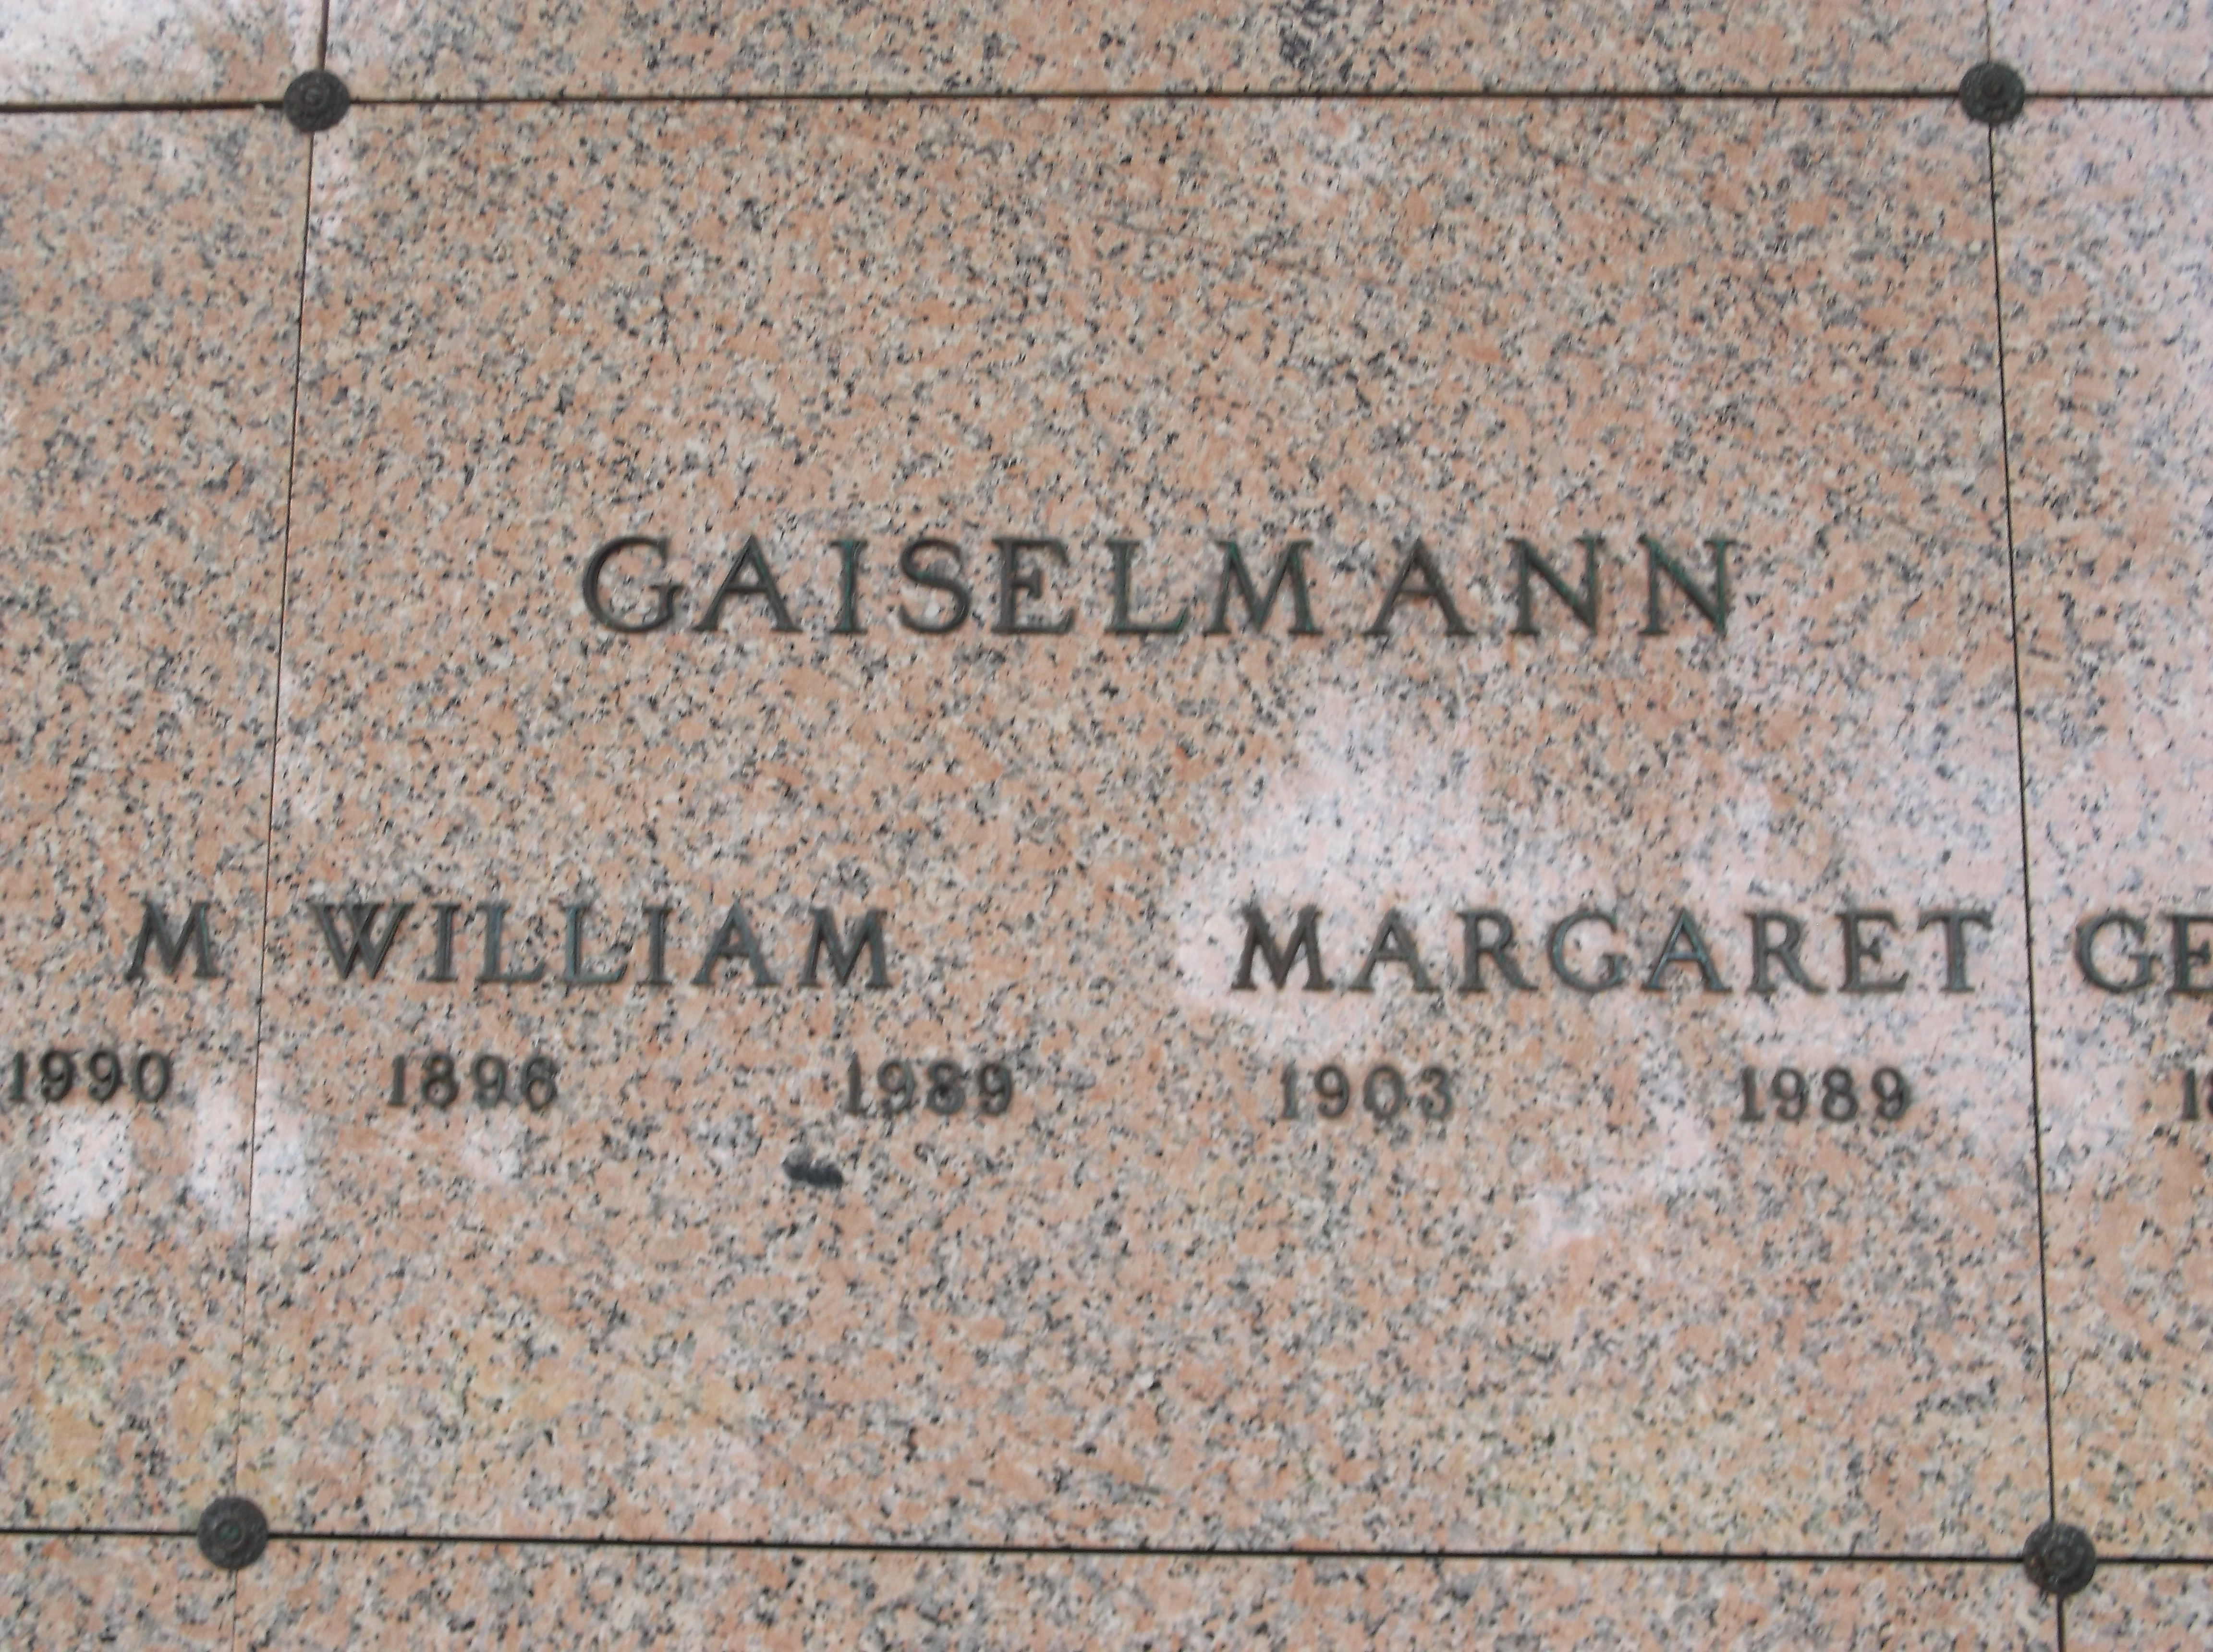 William Gaiselmann